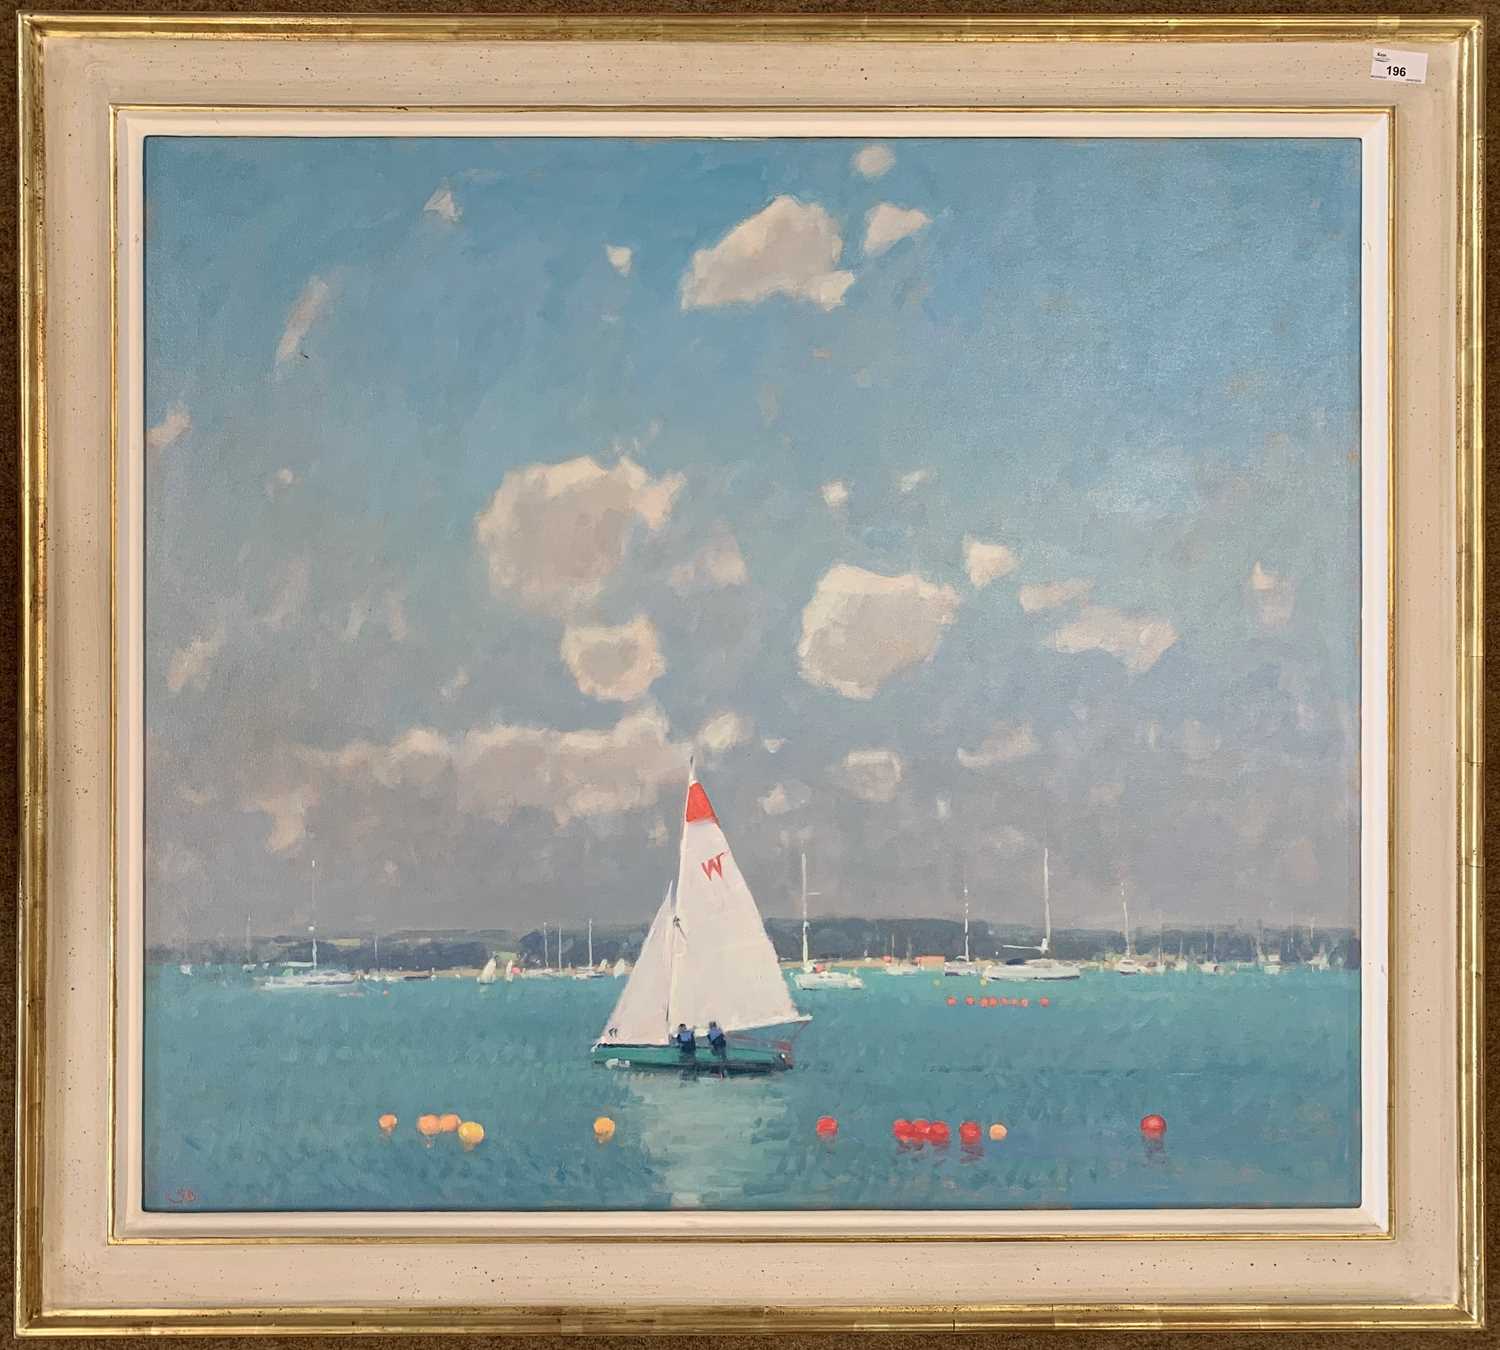 Stephen Brown RBA (B.1947), 'The Wayfarer' oil on canvas, initialed lower left, 75x85cm, framed